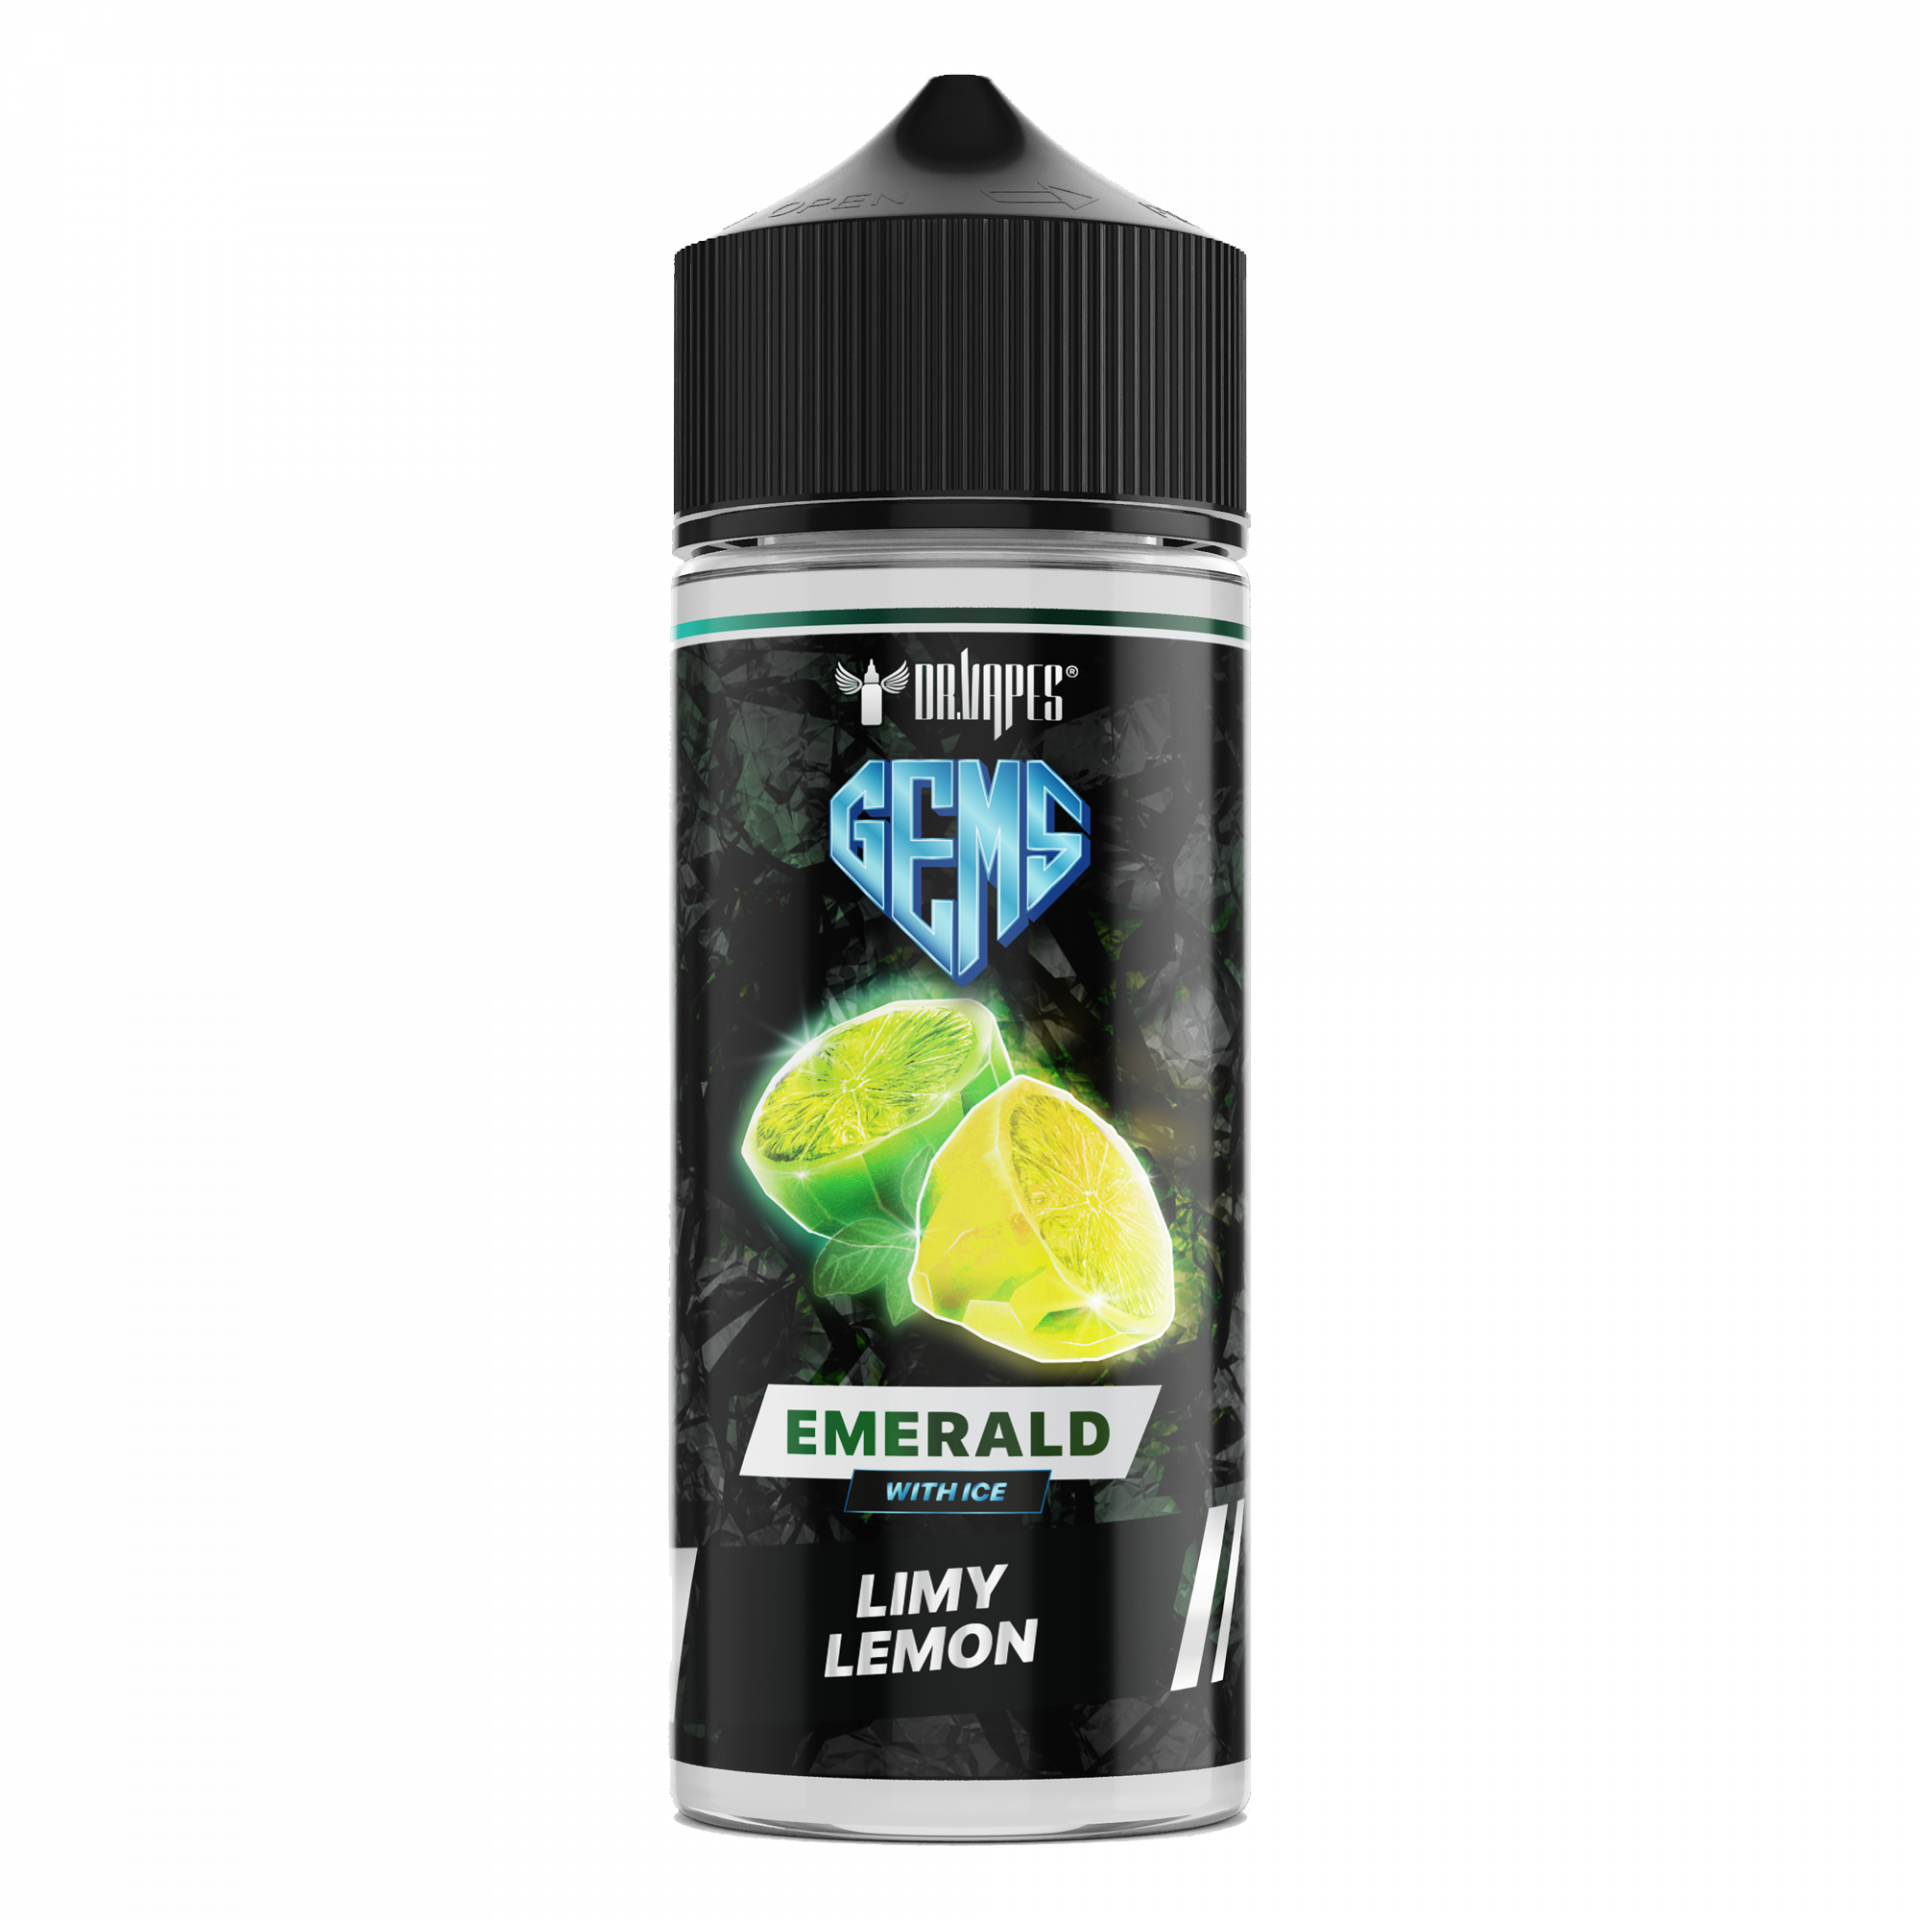  Dr Vapes Gems E liquid - Emerald with Ice Limy Lemon - 100ml 